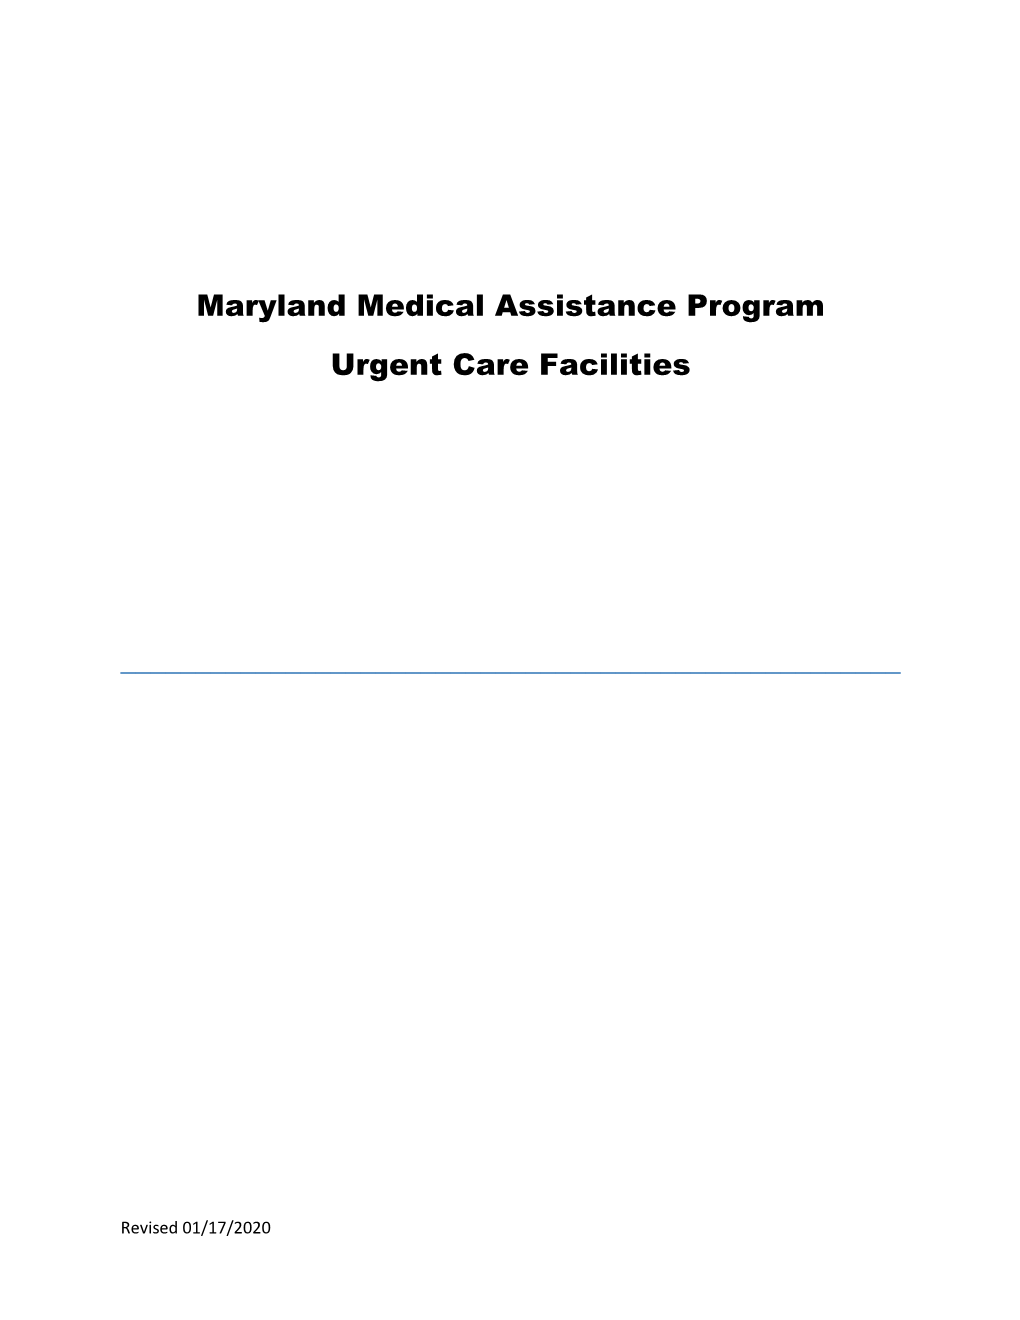 Maryland Medical Assistance Program Urgent Care Facilities